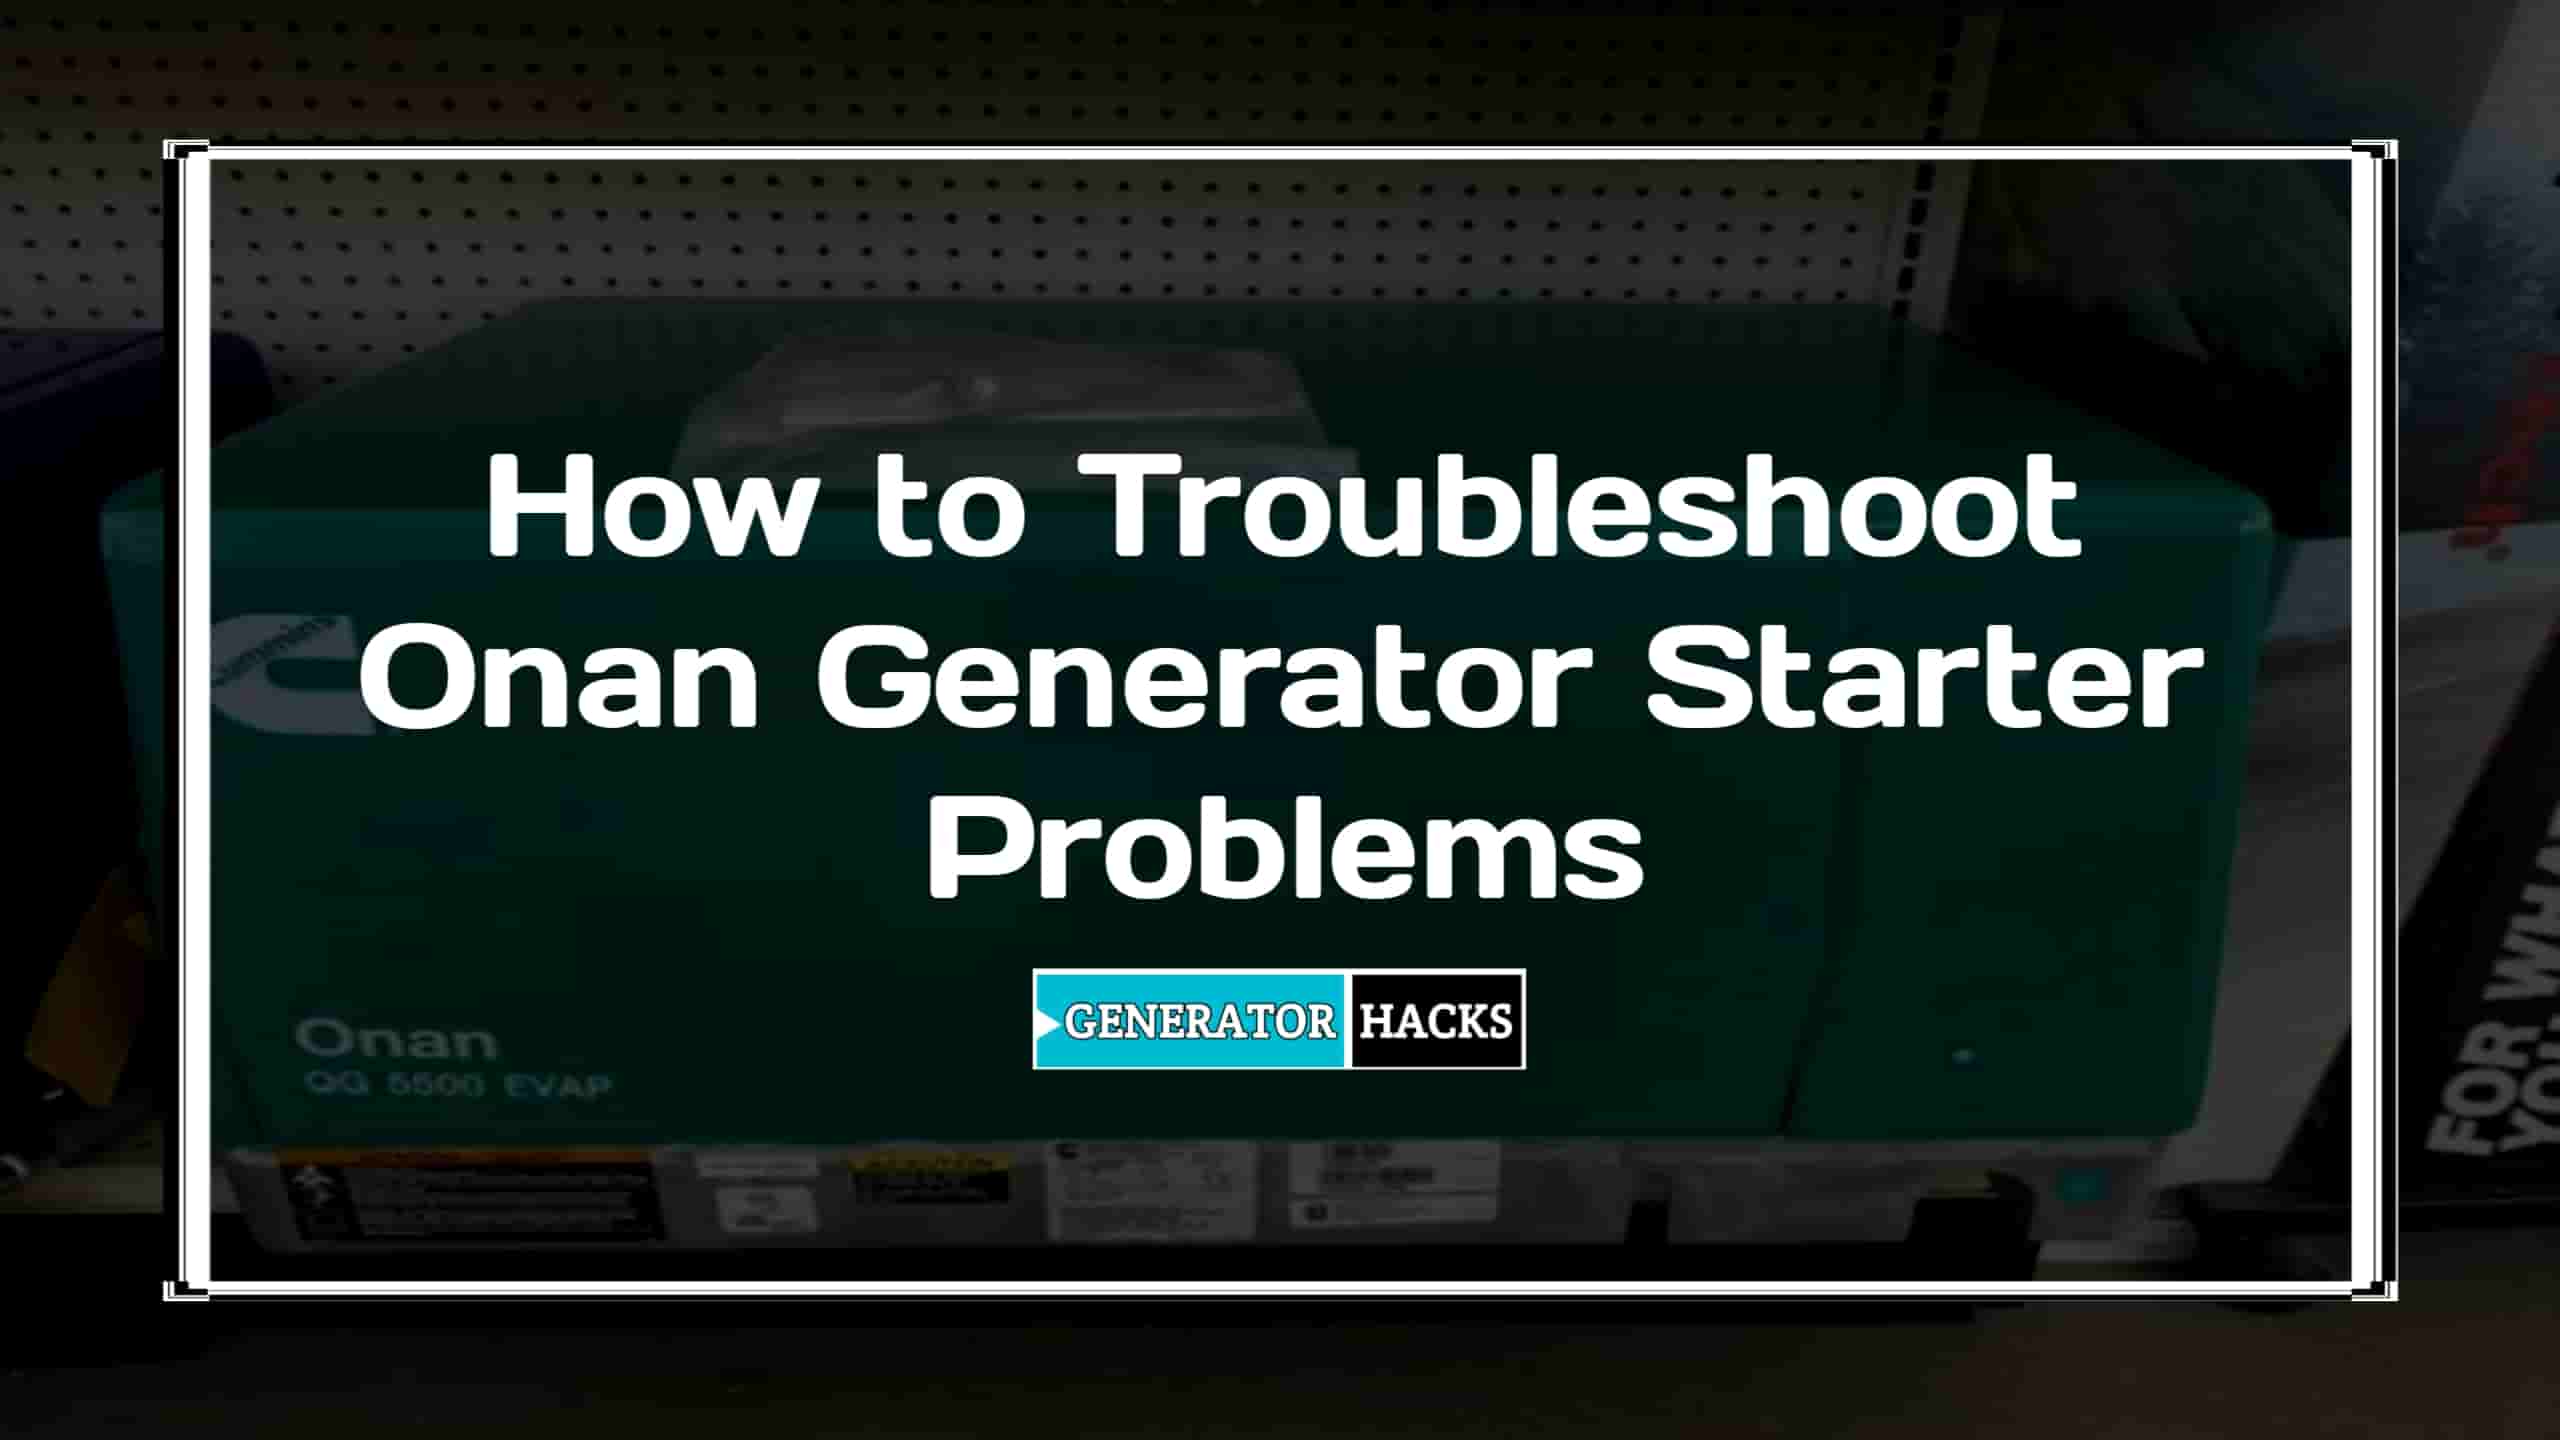 Onan generator starter problems